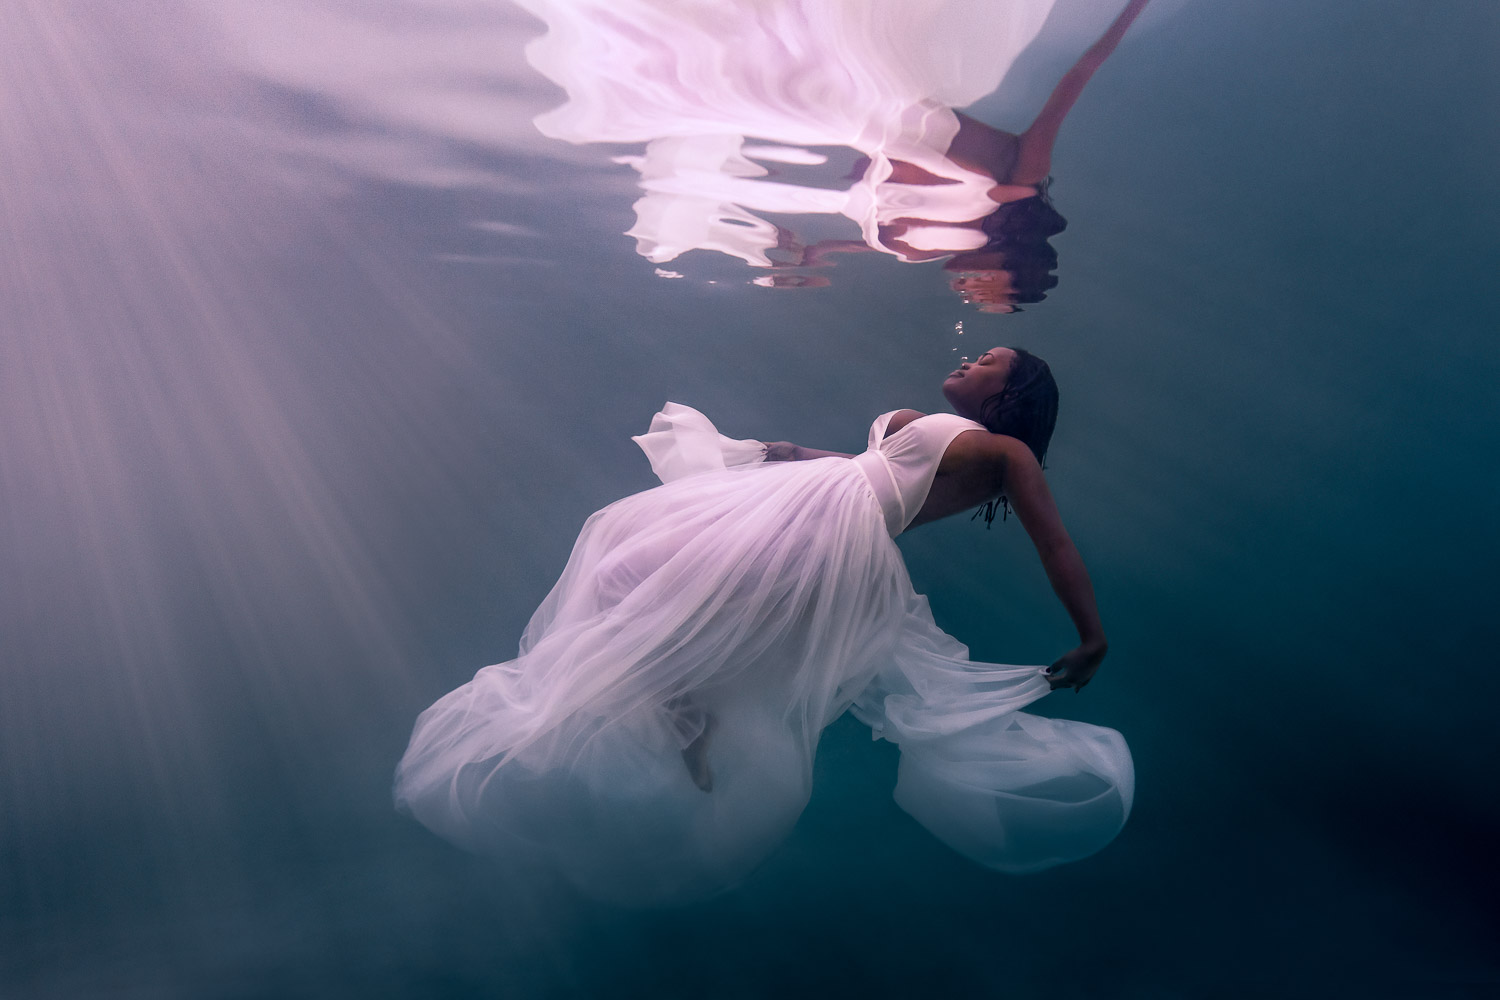 underwater woman photoshoot with bride wearing wedding dress in pool